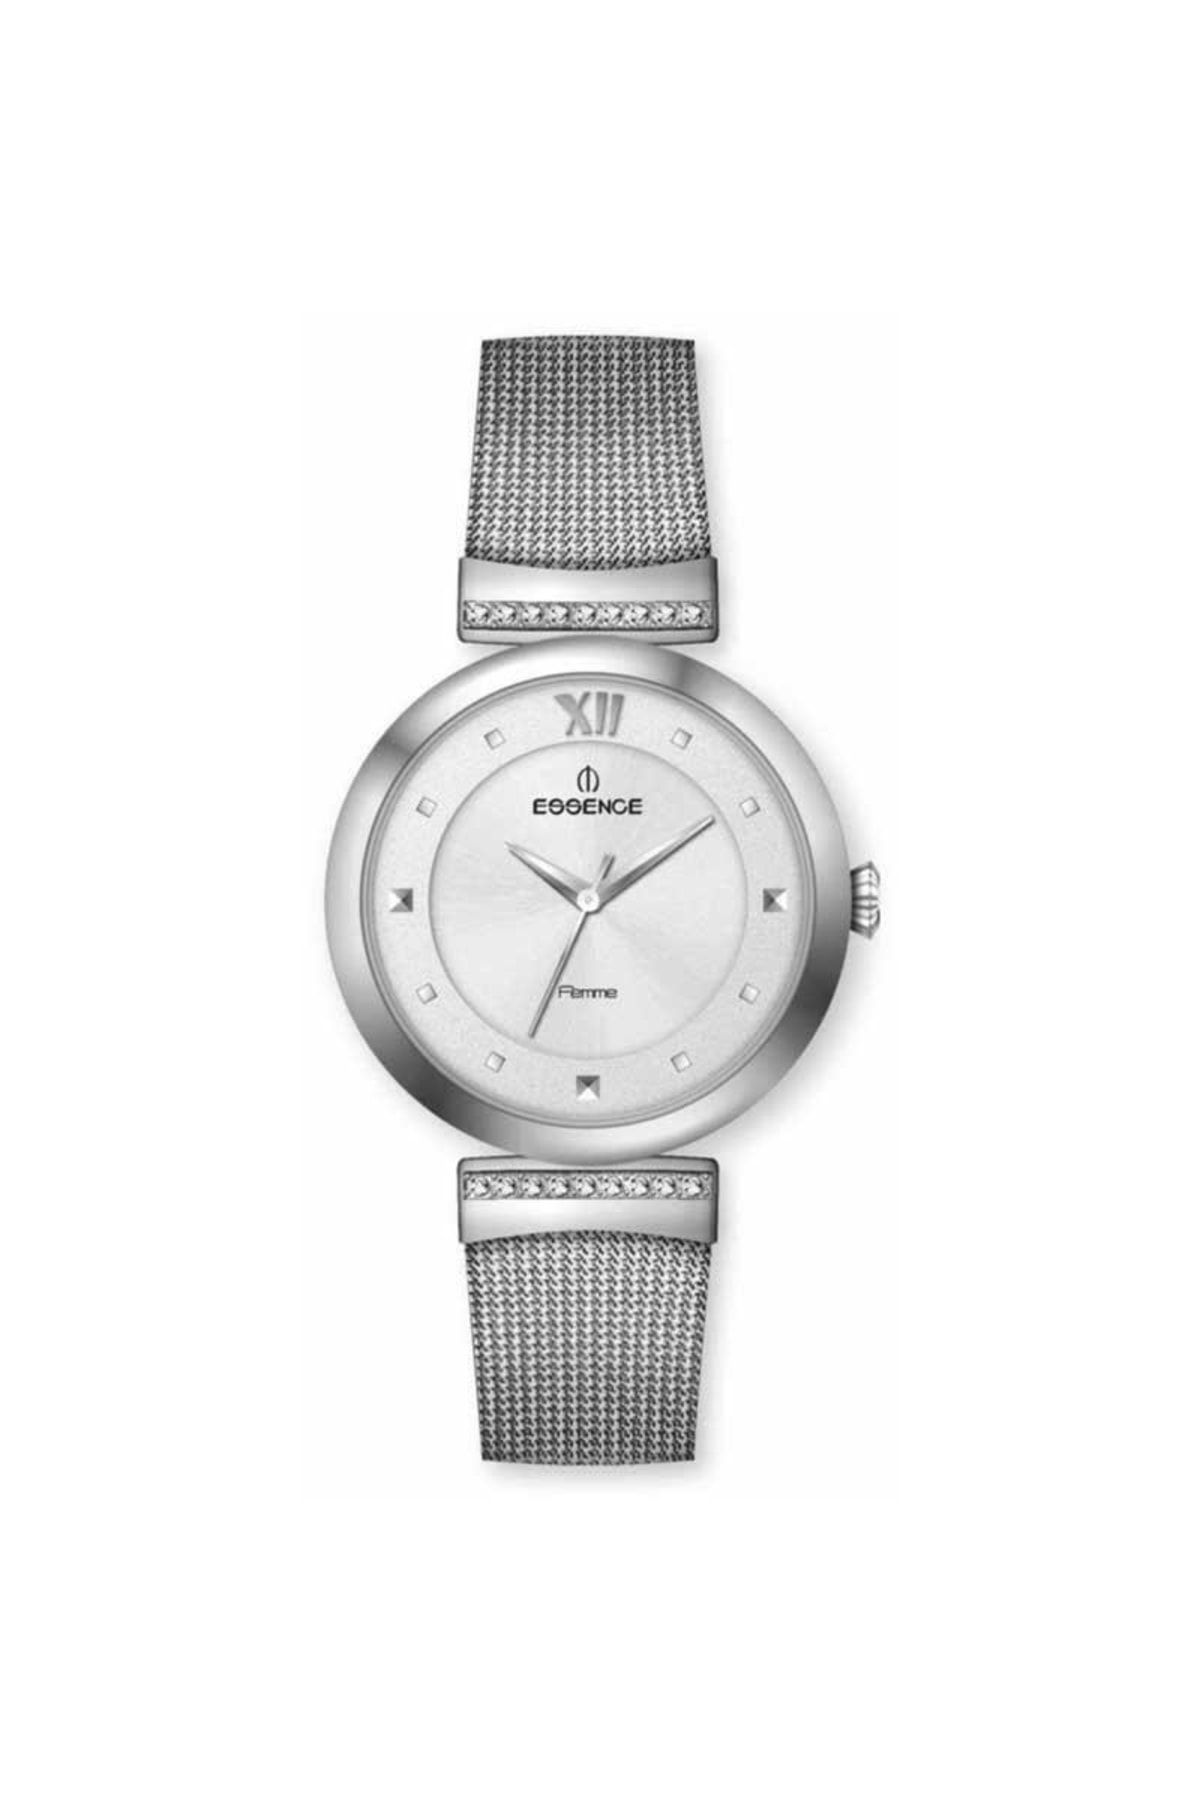 WTS] Formex Essence 39 Mother of Pearl COSC Chronometer Watch :  r/WatchExchangeCanada